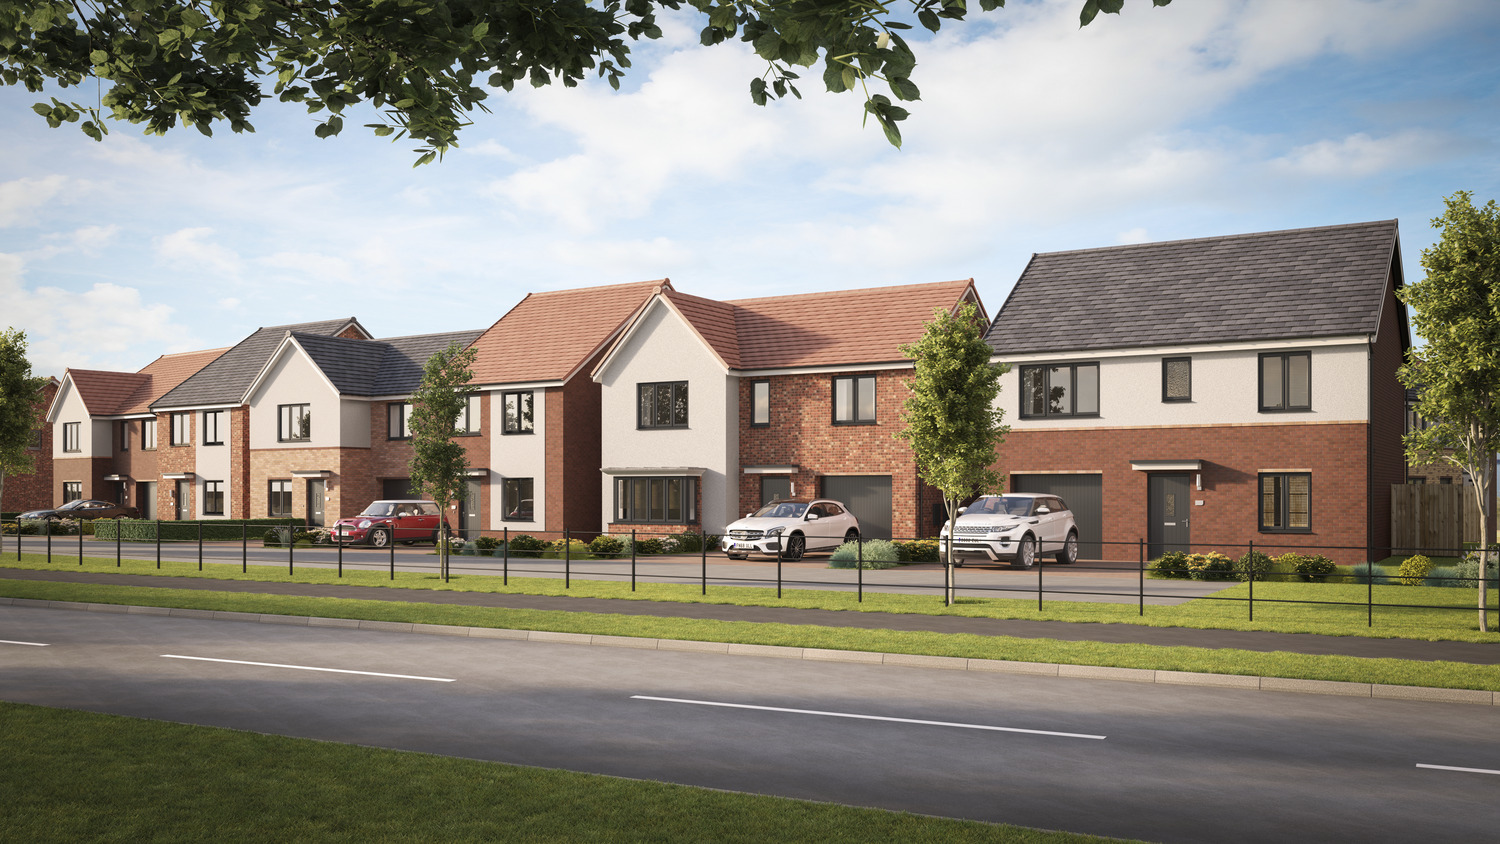 Avant lodges £51m plan for 230 new homes in Netherburn